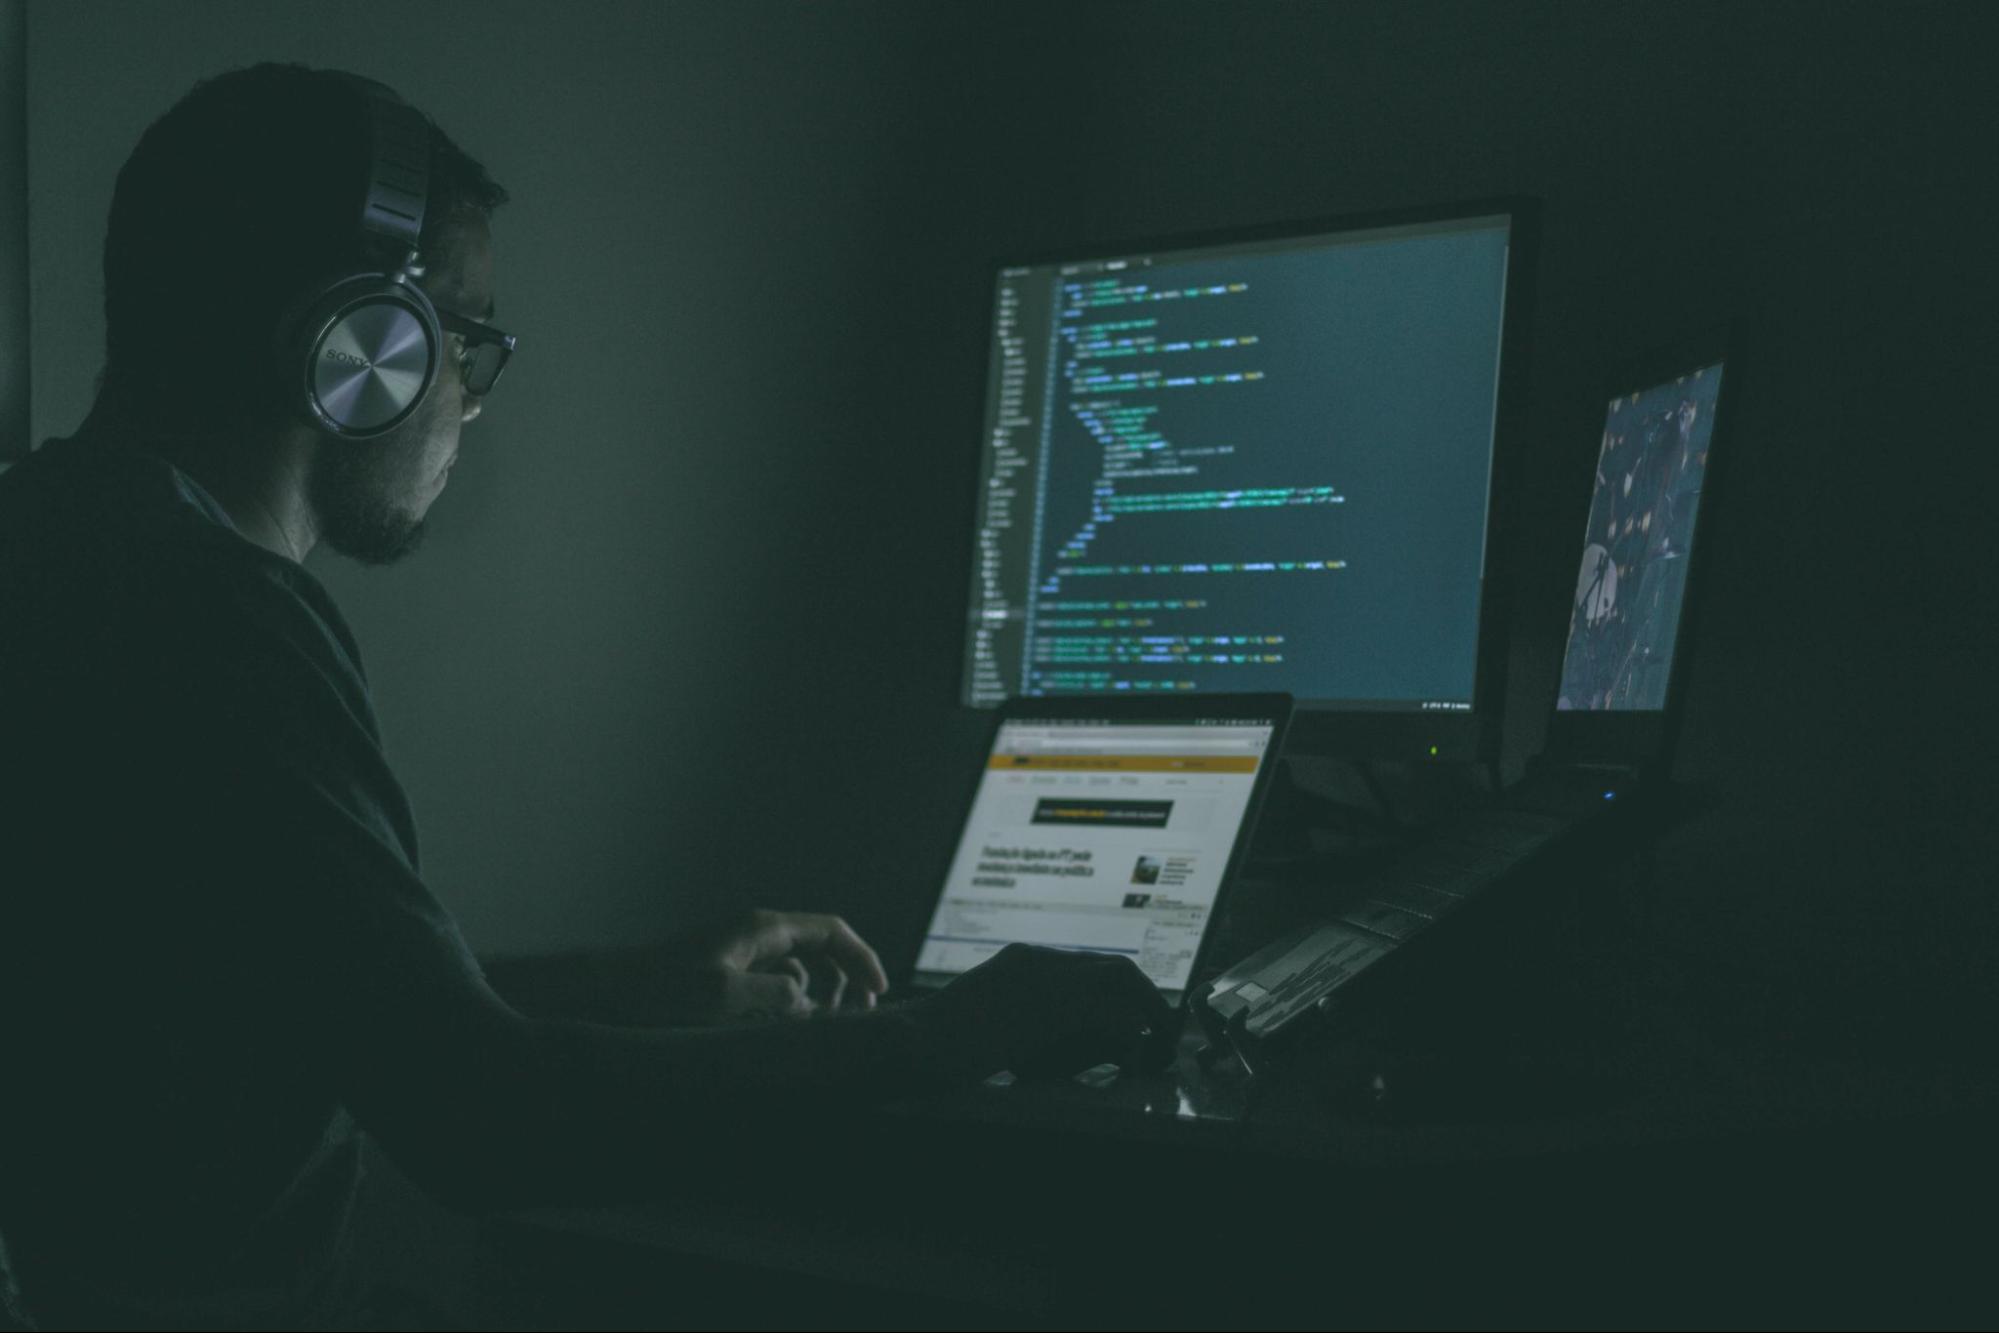 man working on code, wearing headphones